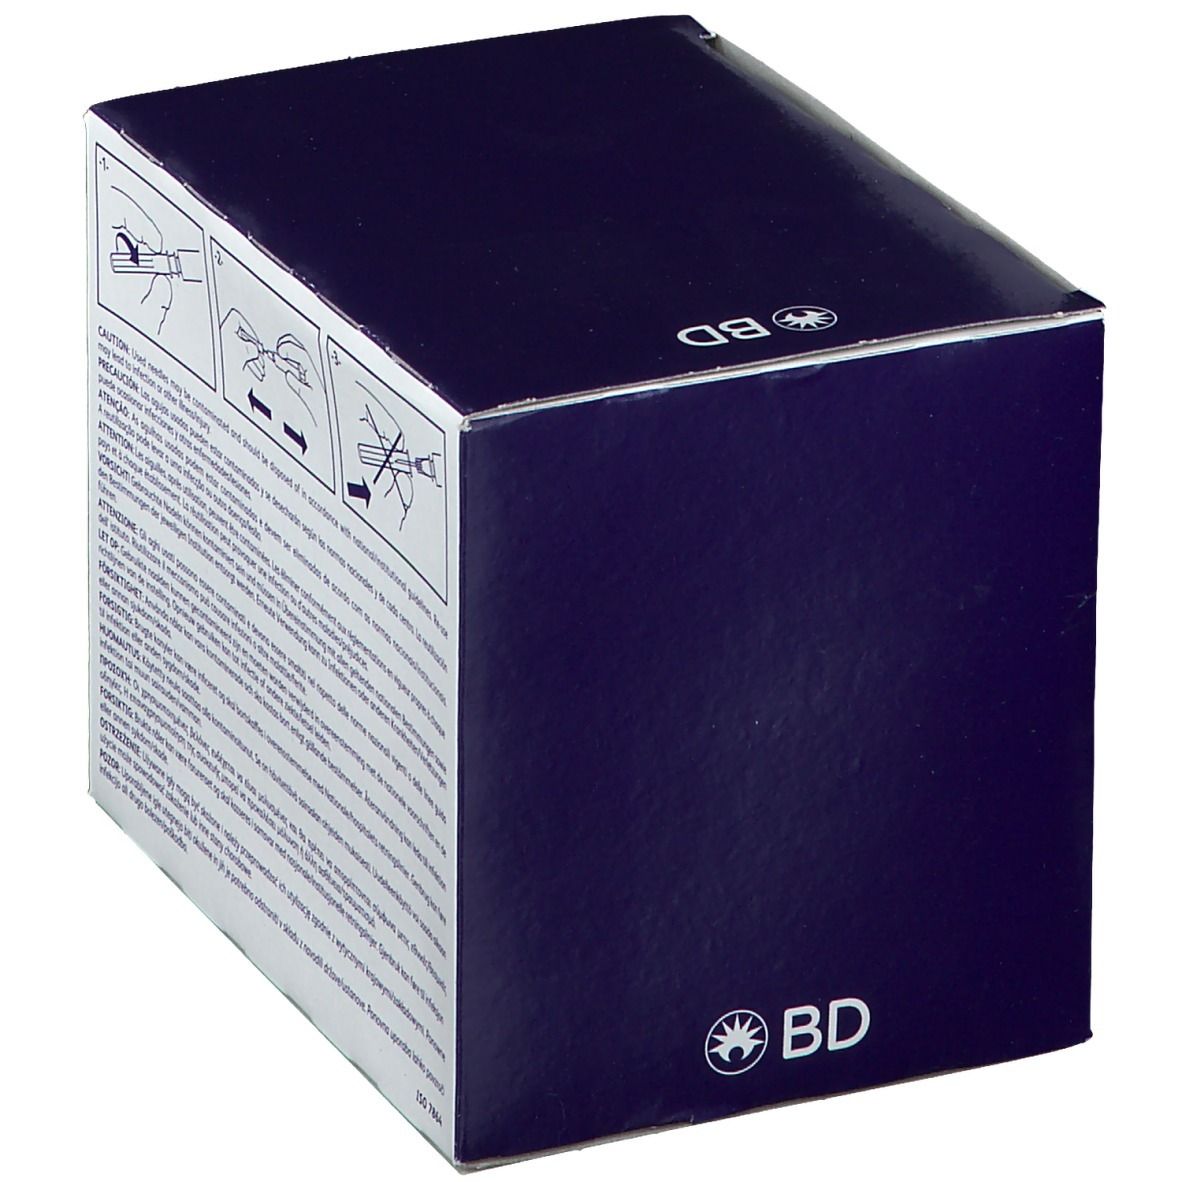 BD Microlance § Sonderkanüle 16 G 1 1/2 1,65 x 40 mm